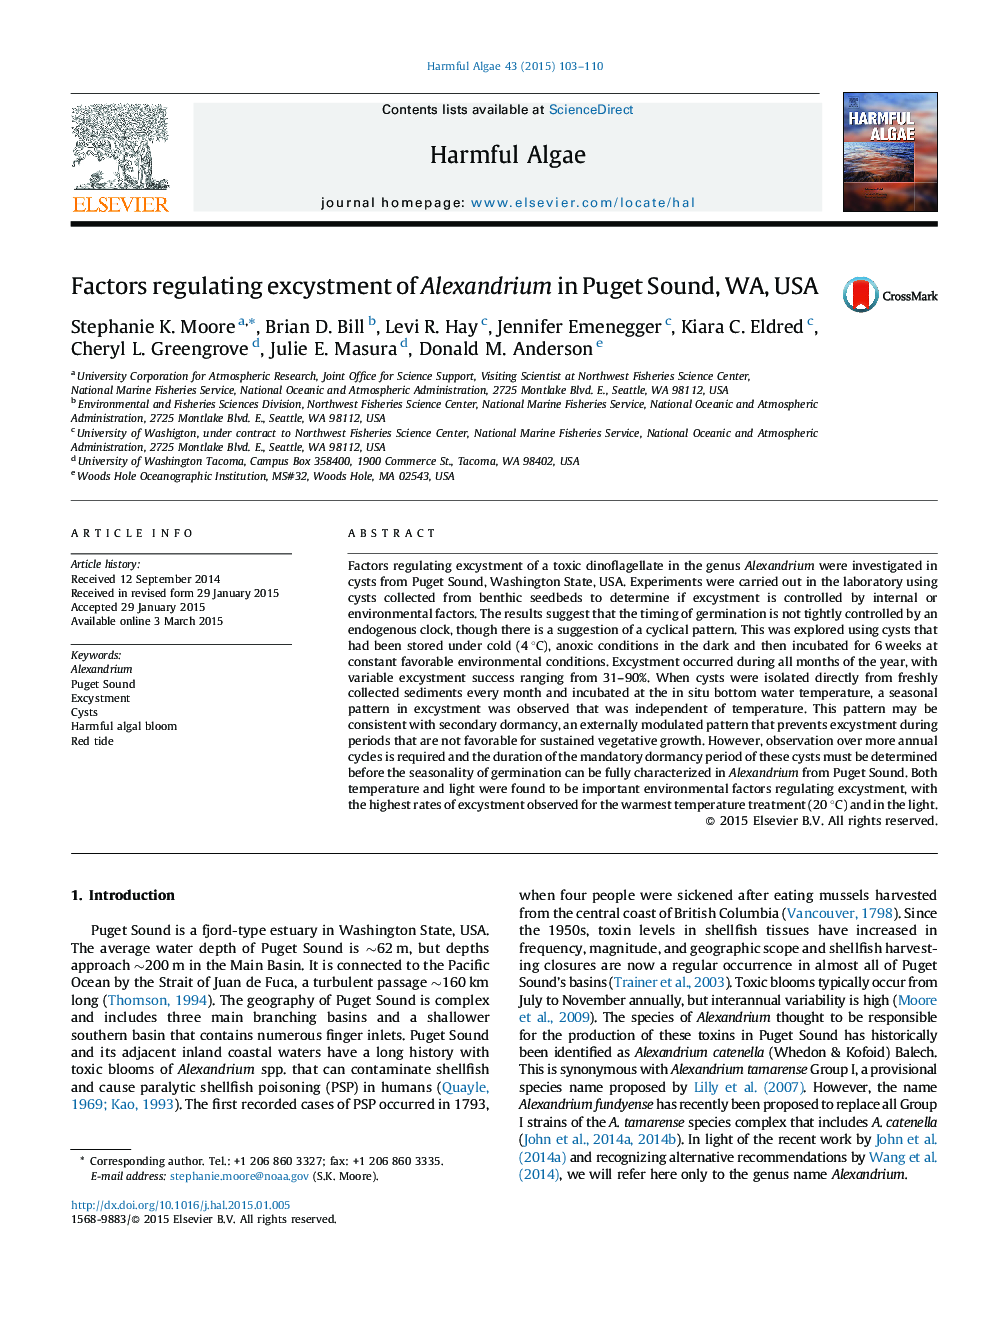 Factors regulating excystment of Alexandrium in Puget Sound, WA, USA